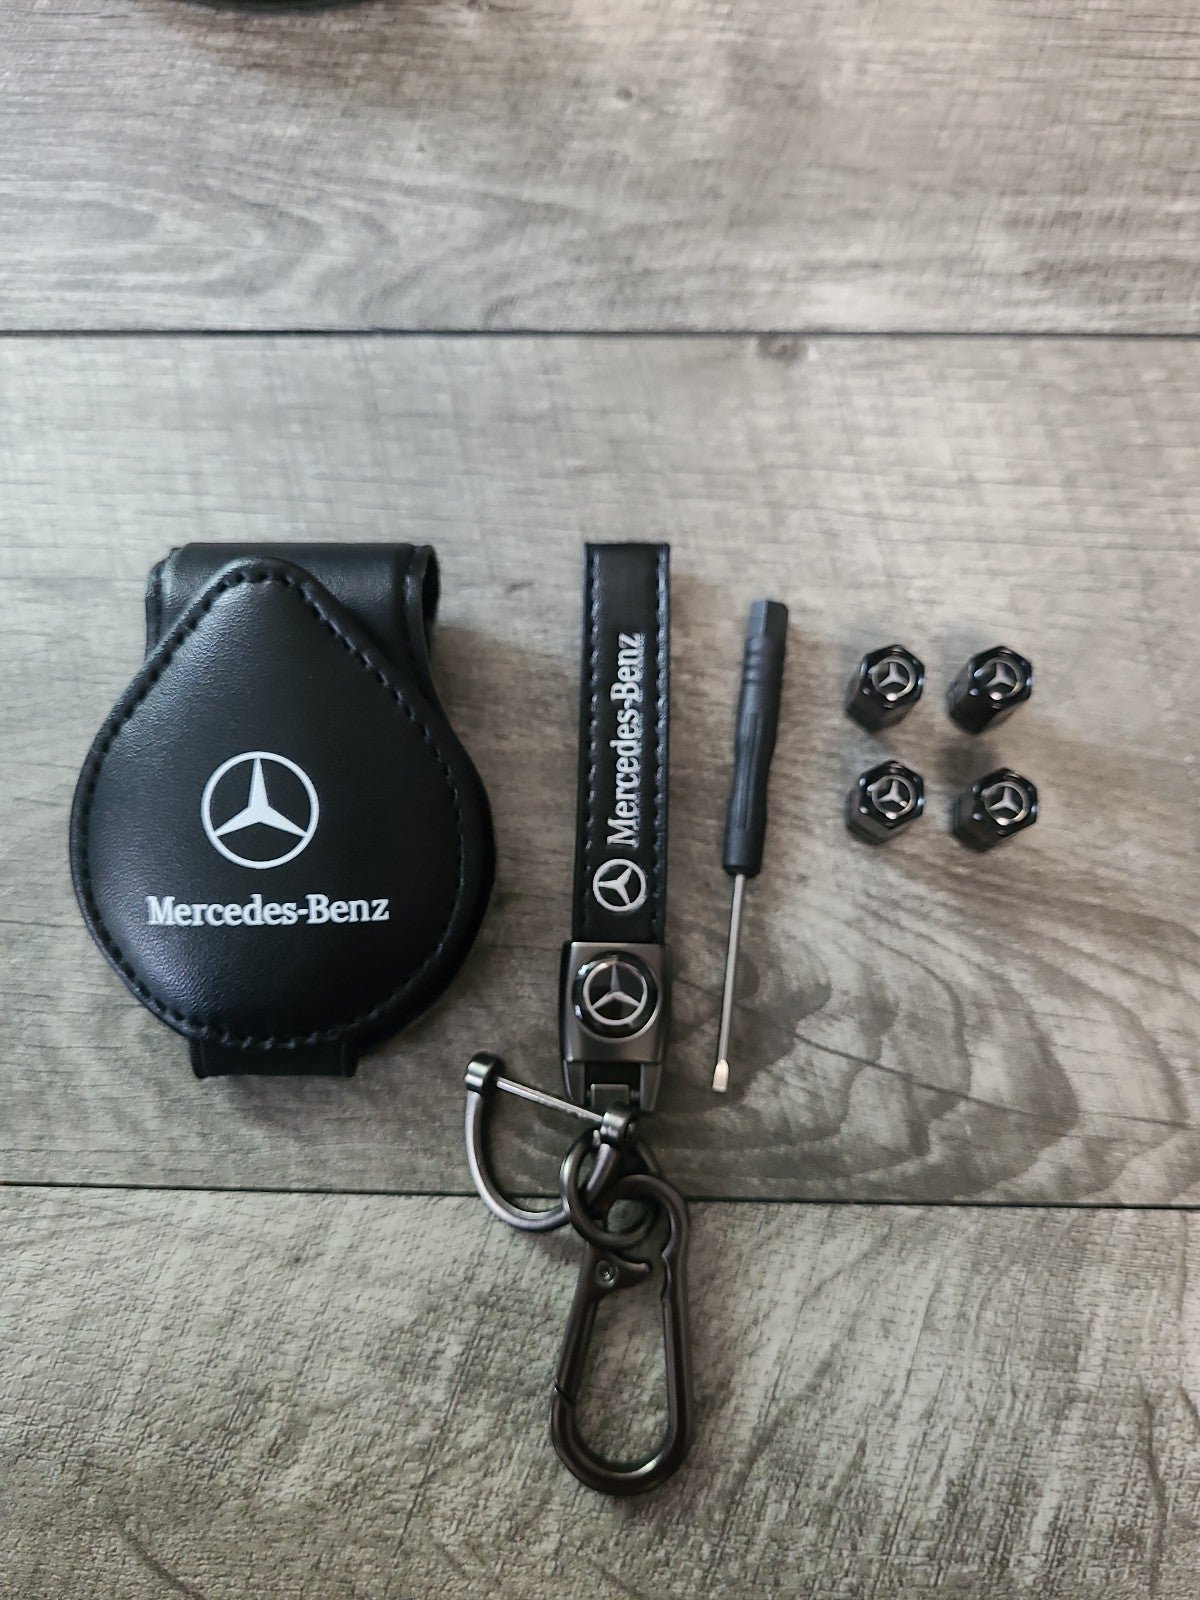 Accessories compatible with Mercedes Benz. eUypoLTDJ